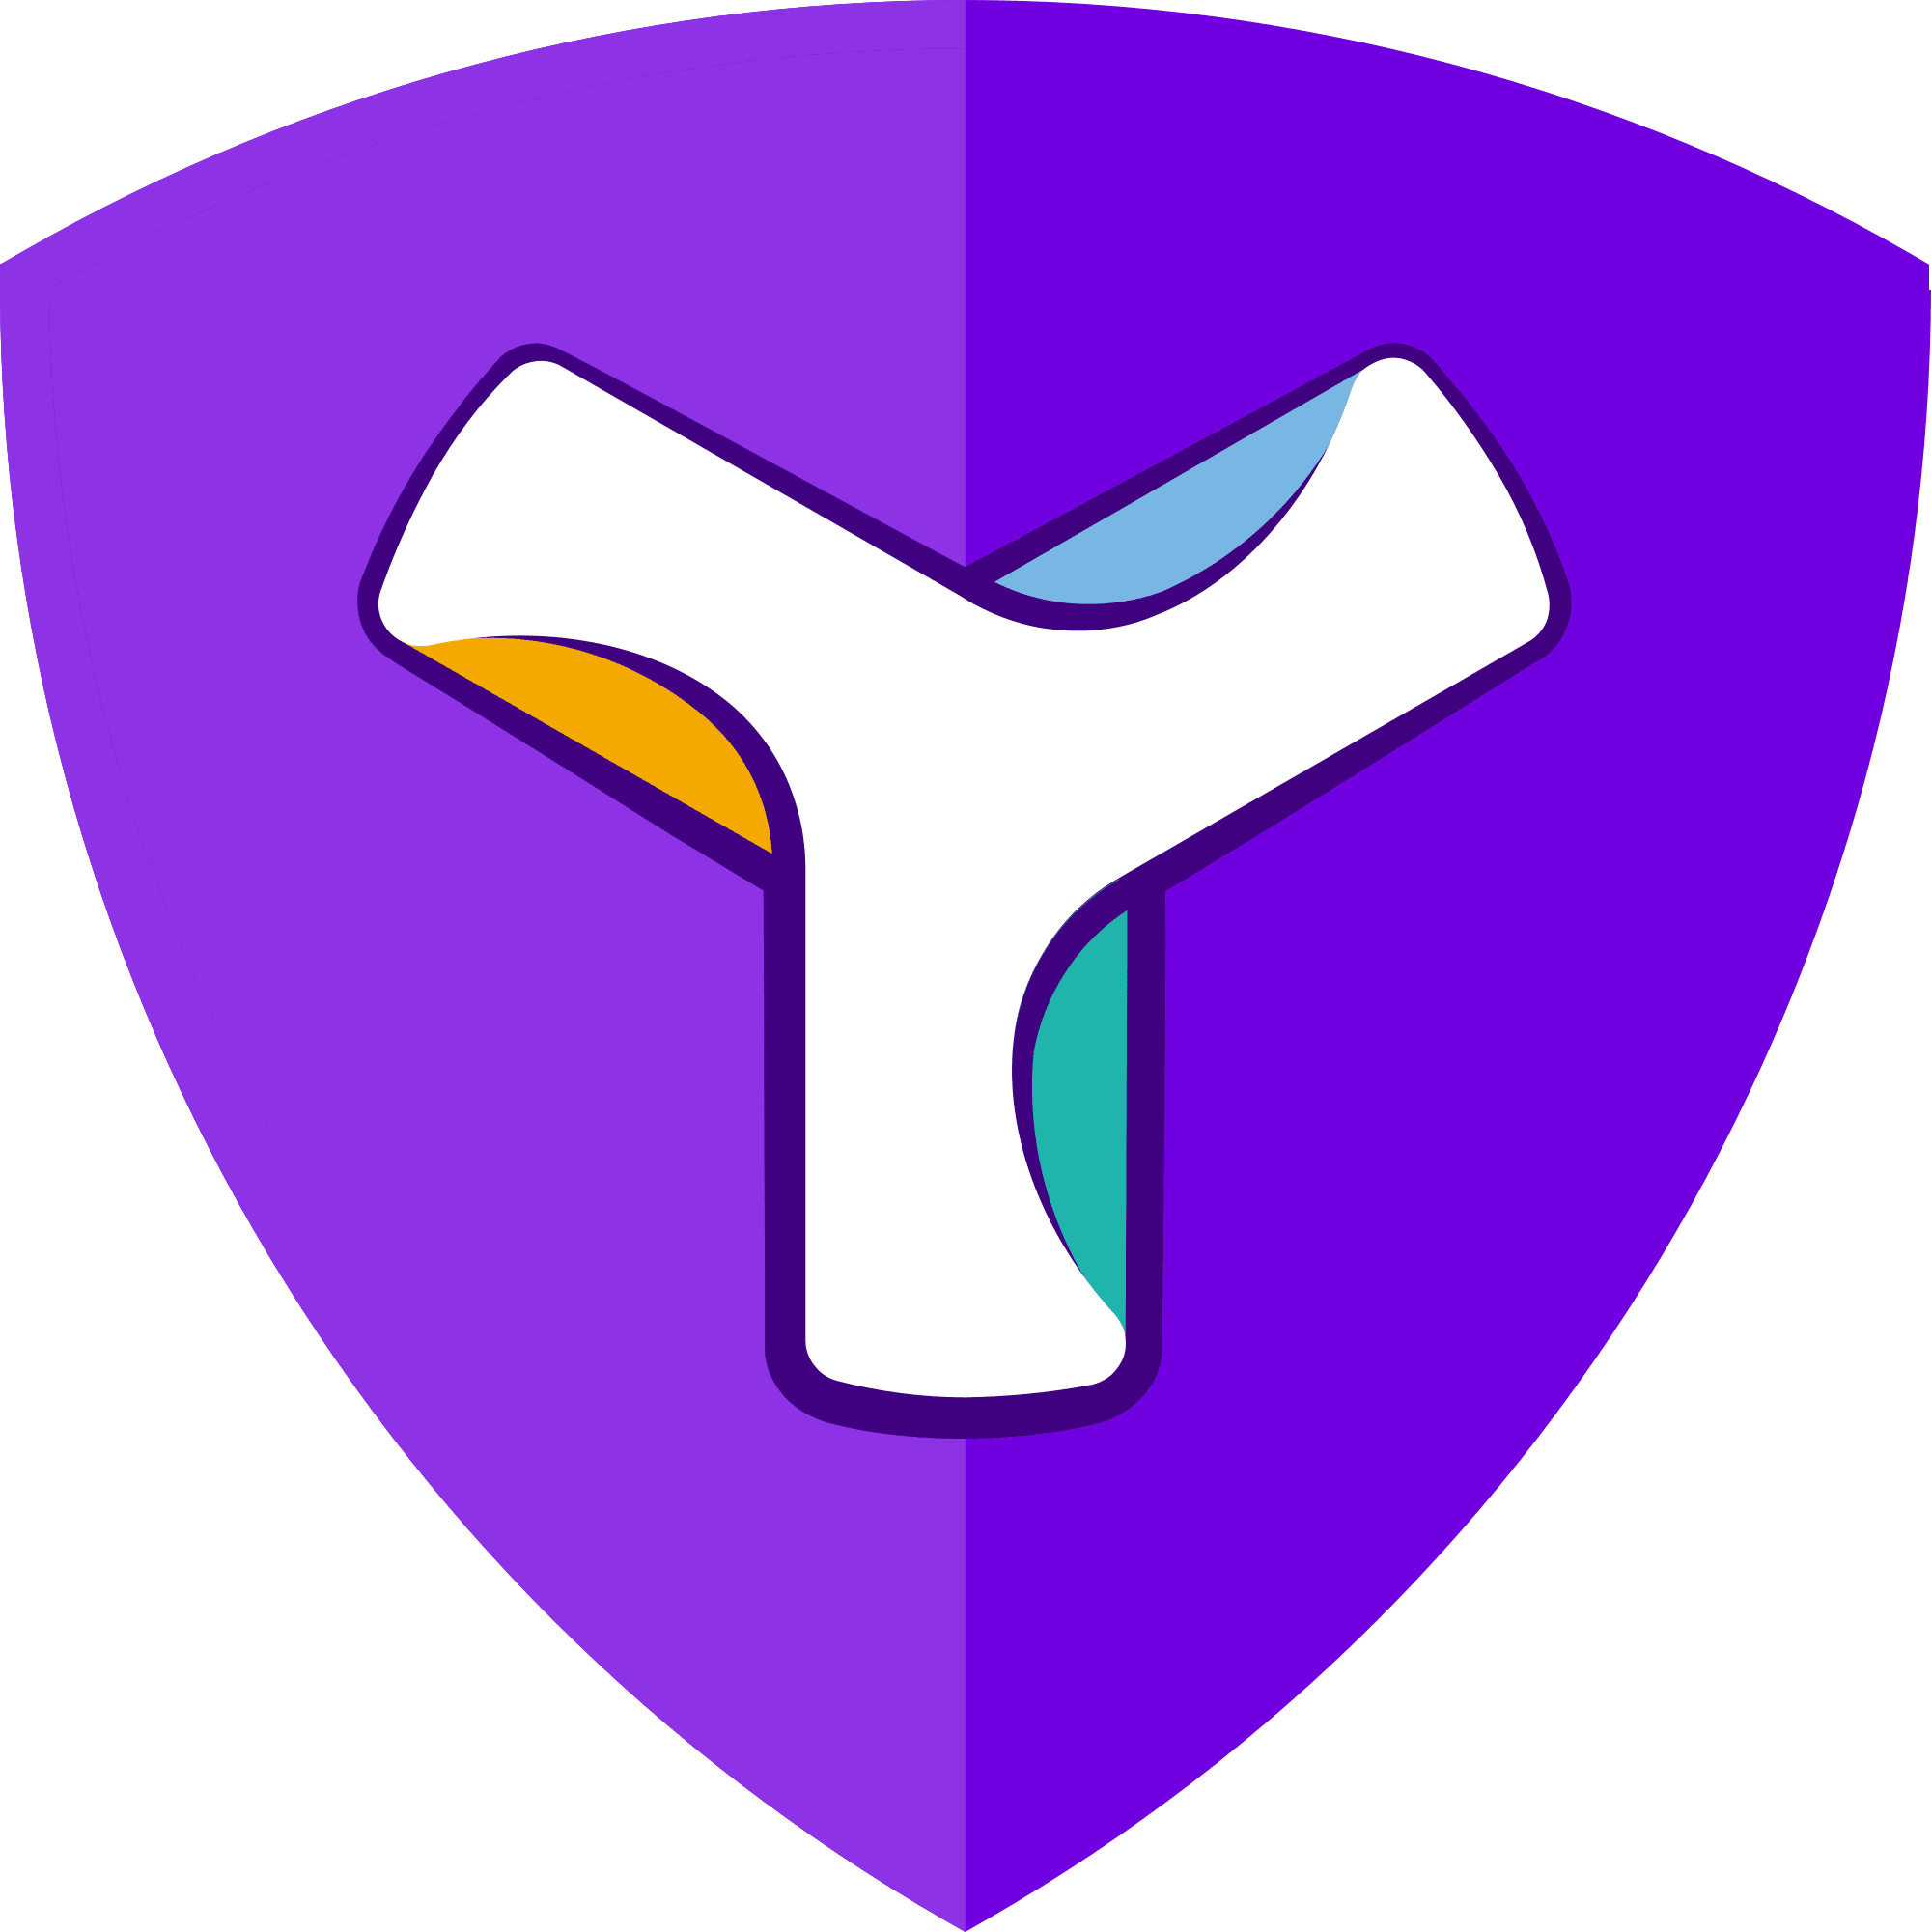 Symbol logo in png format